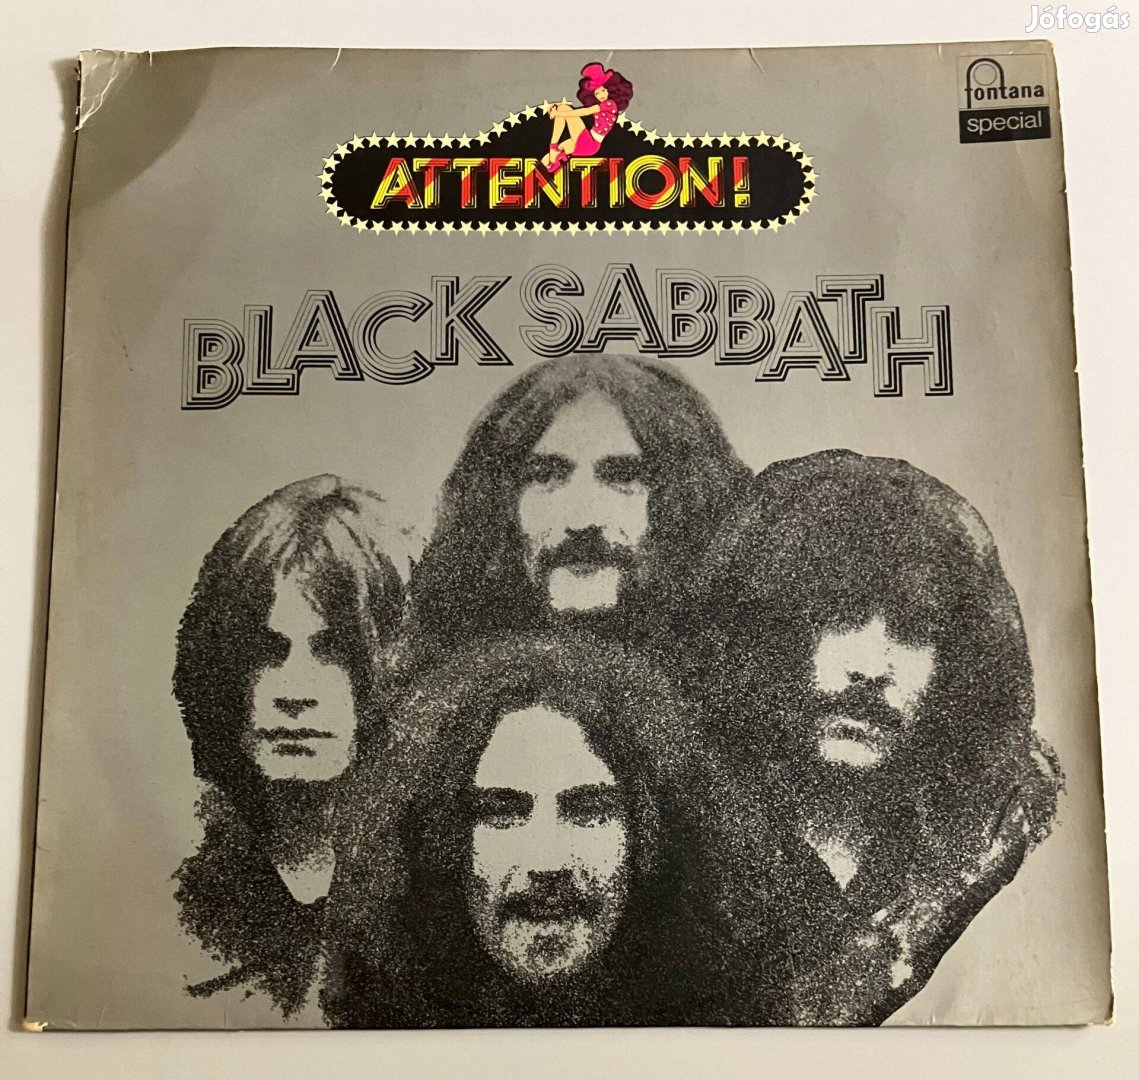 Black Sabbath - Attention! Black Sabbath! (német, fontana)